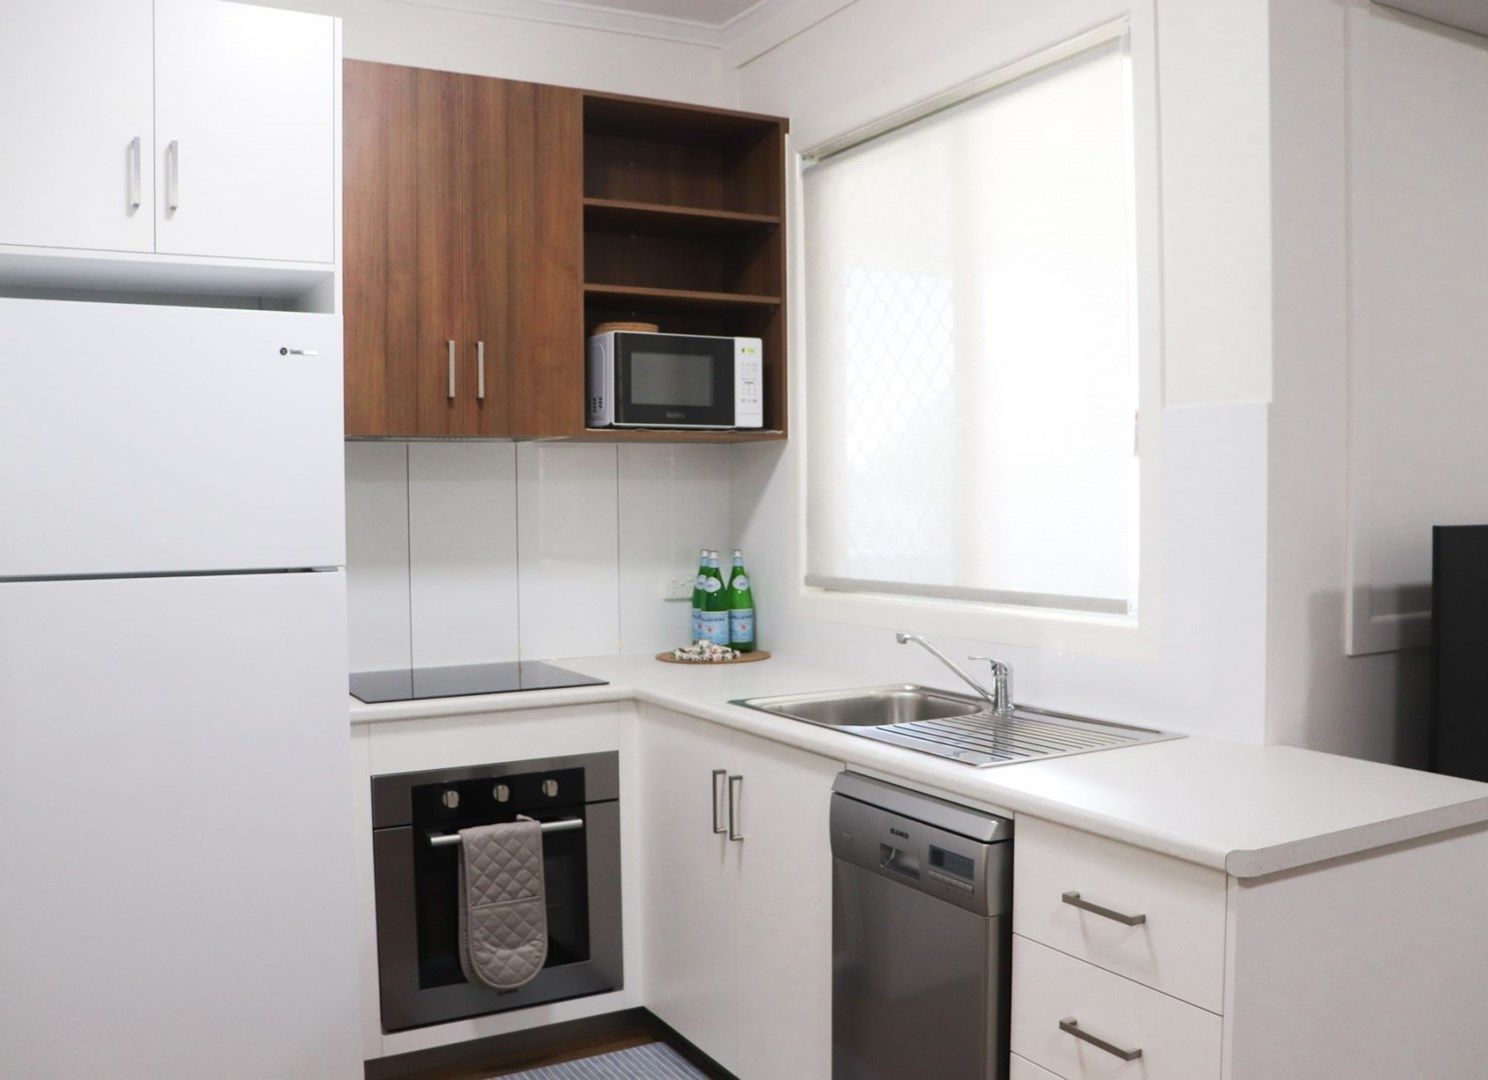 2 bedrooms Apartment / Unit / Flat in 3/48 Wellington Street MACKAY QLD, 4740